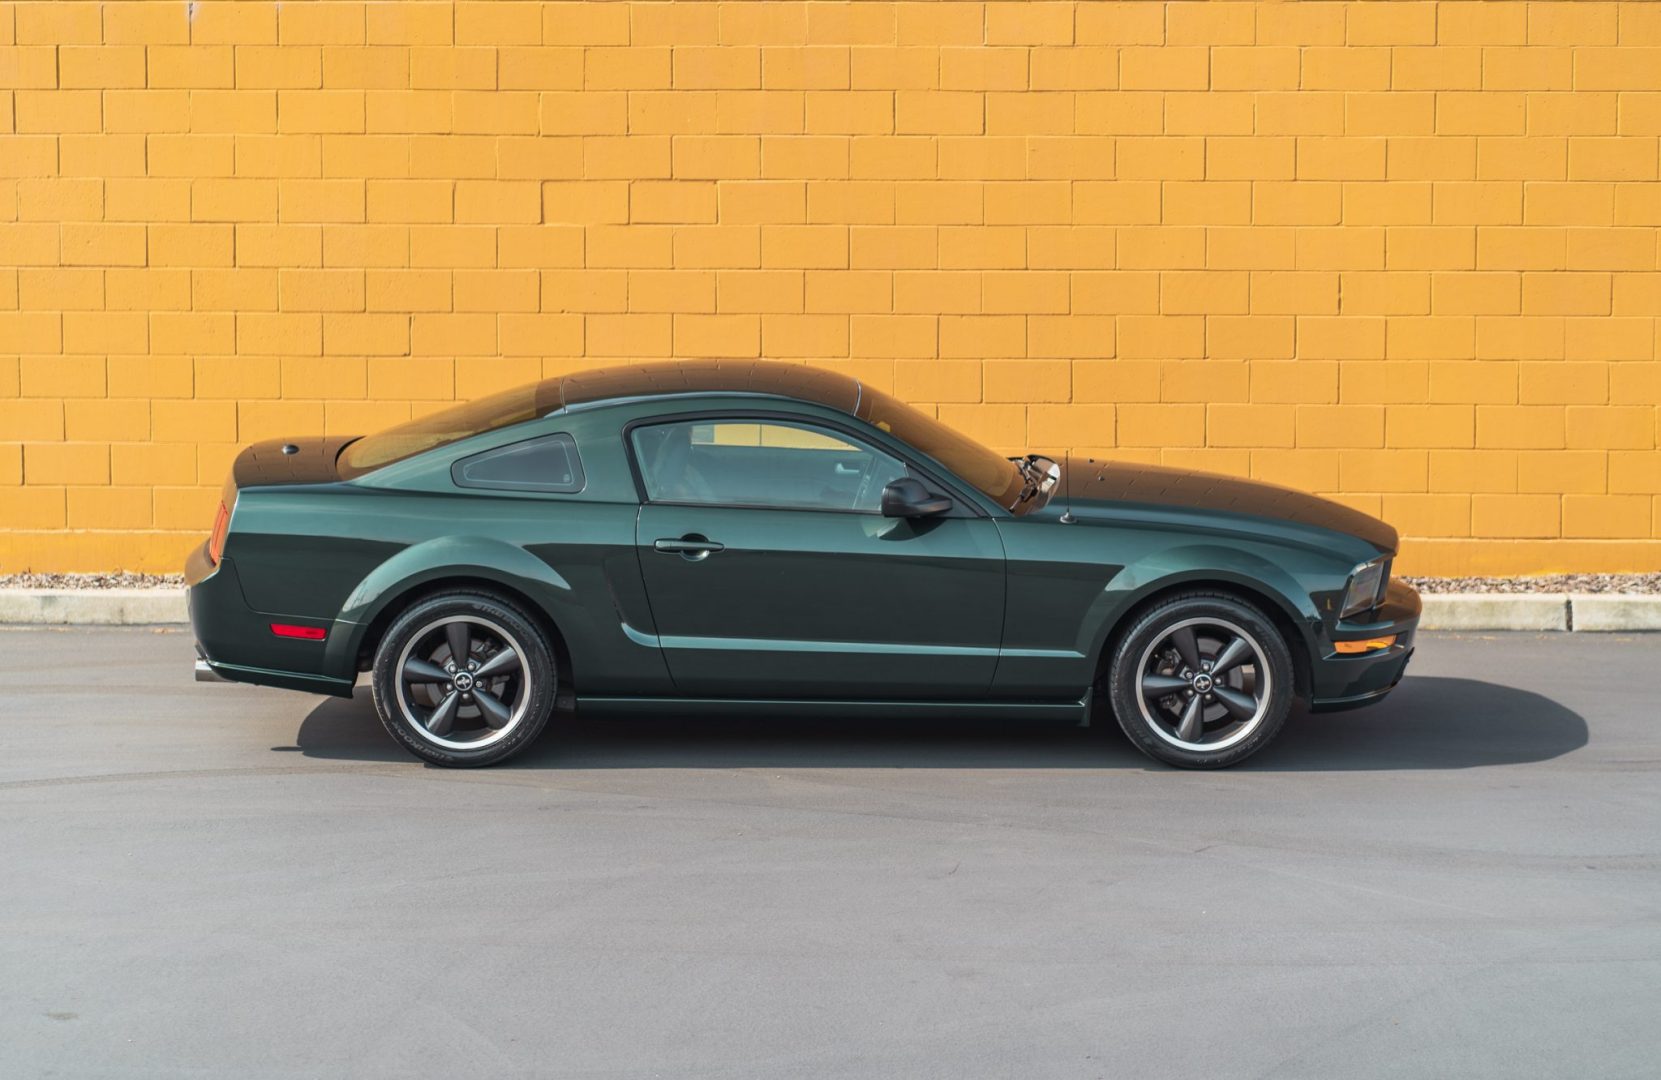 2008 Ford Mustang Bullitt, 5 Speed, Original, 66K Miles, Sold!